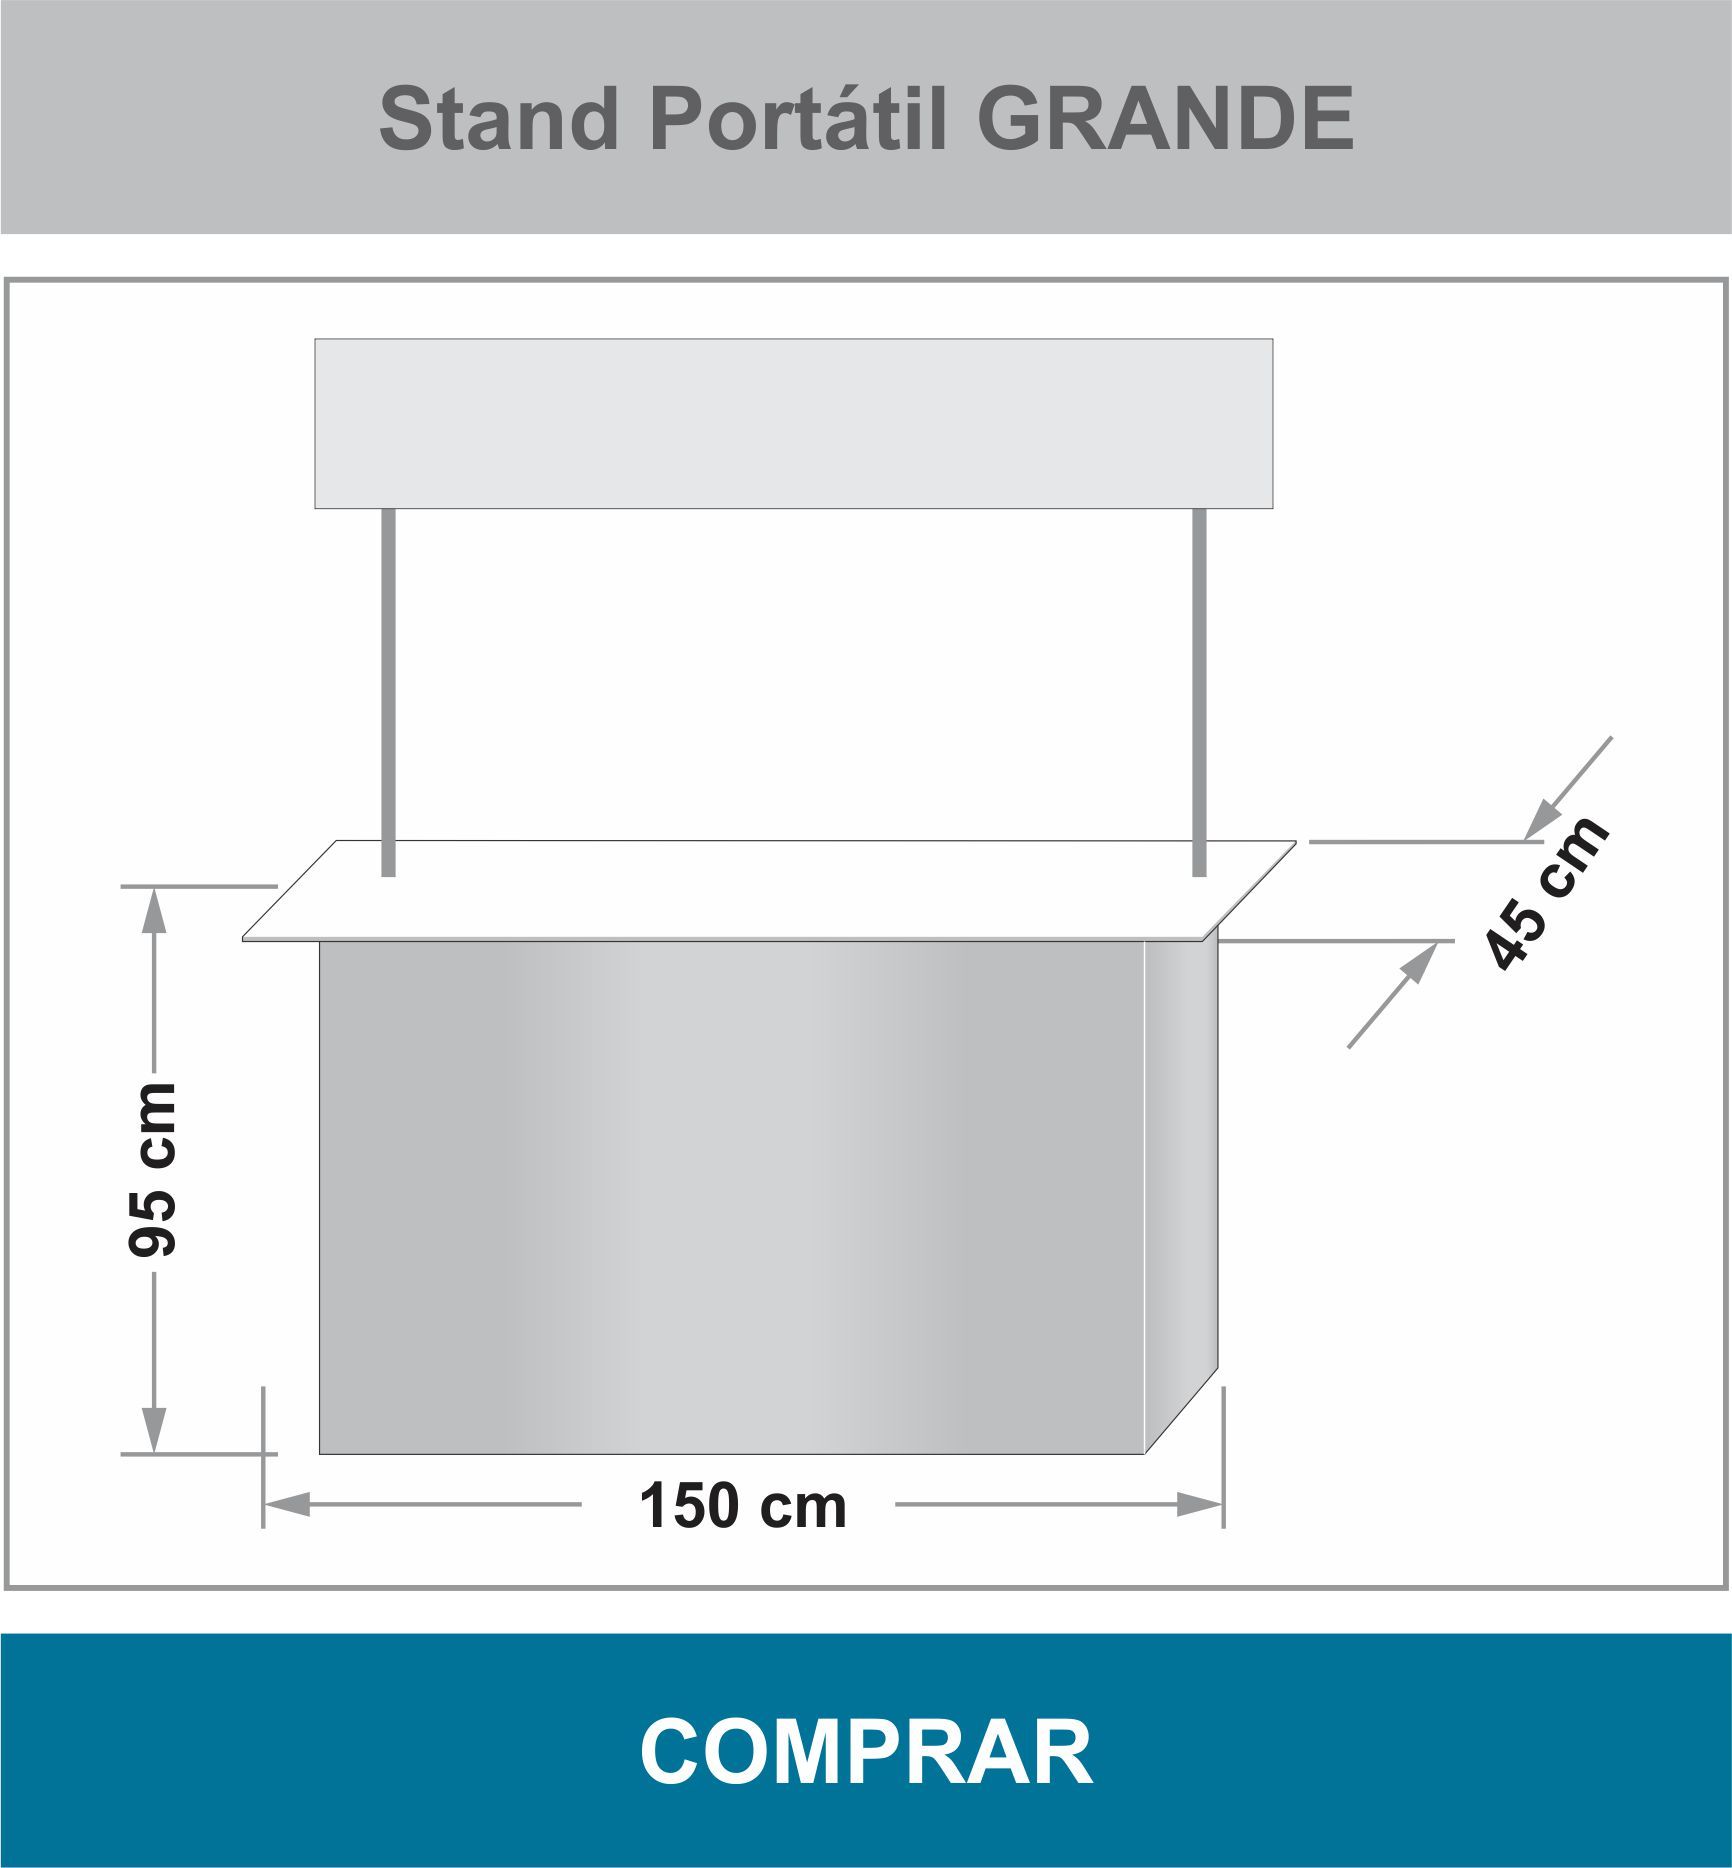 Stand Portátil Grande